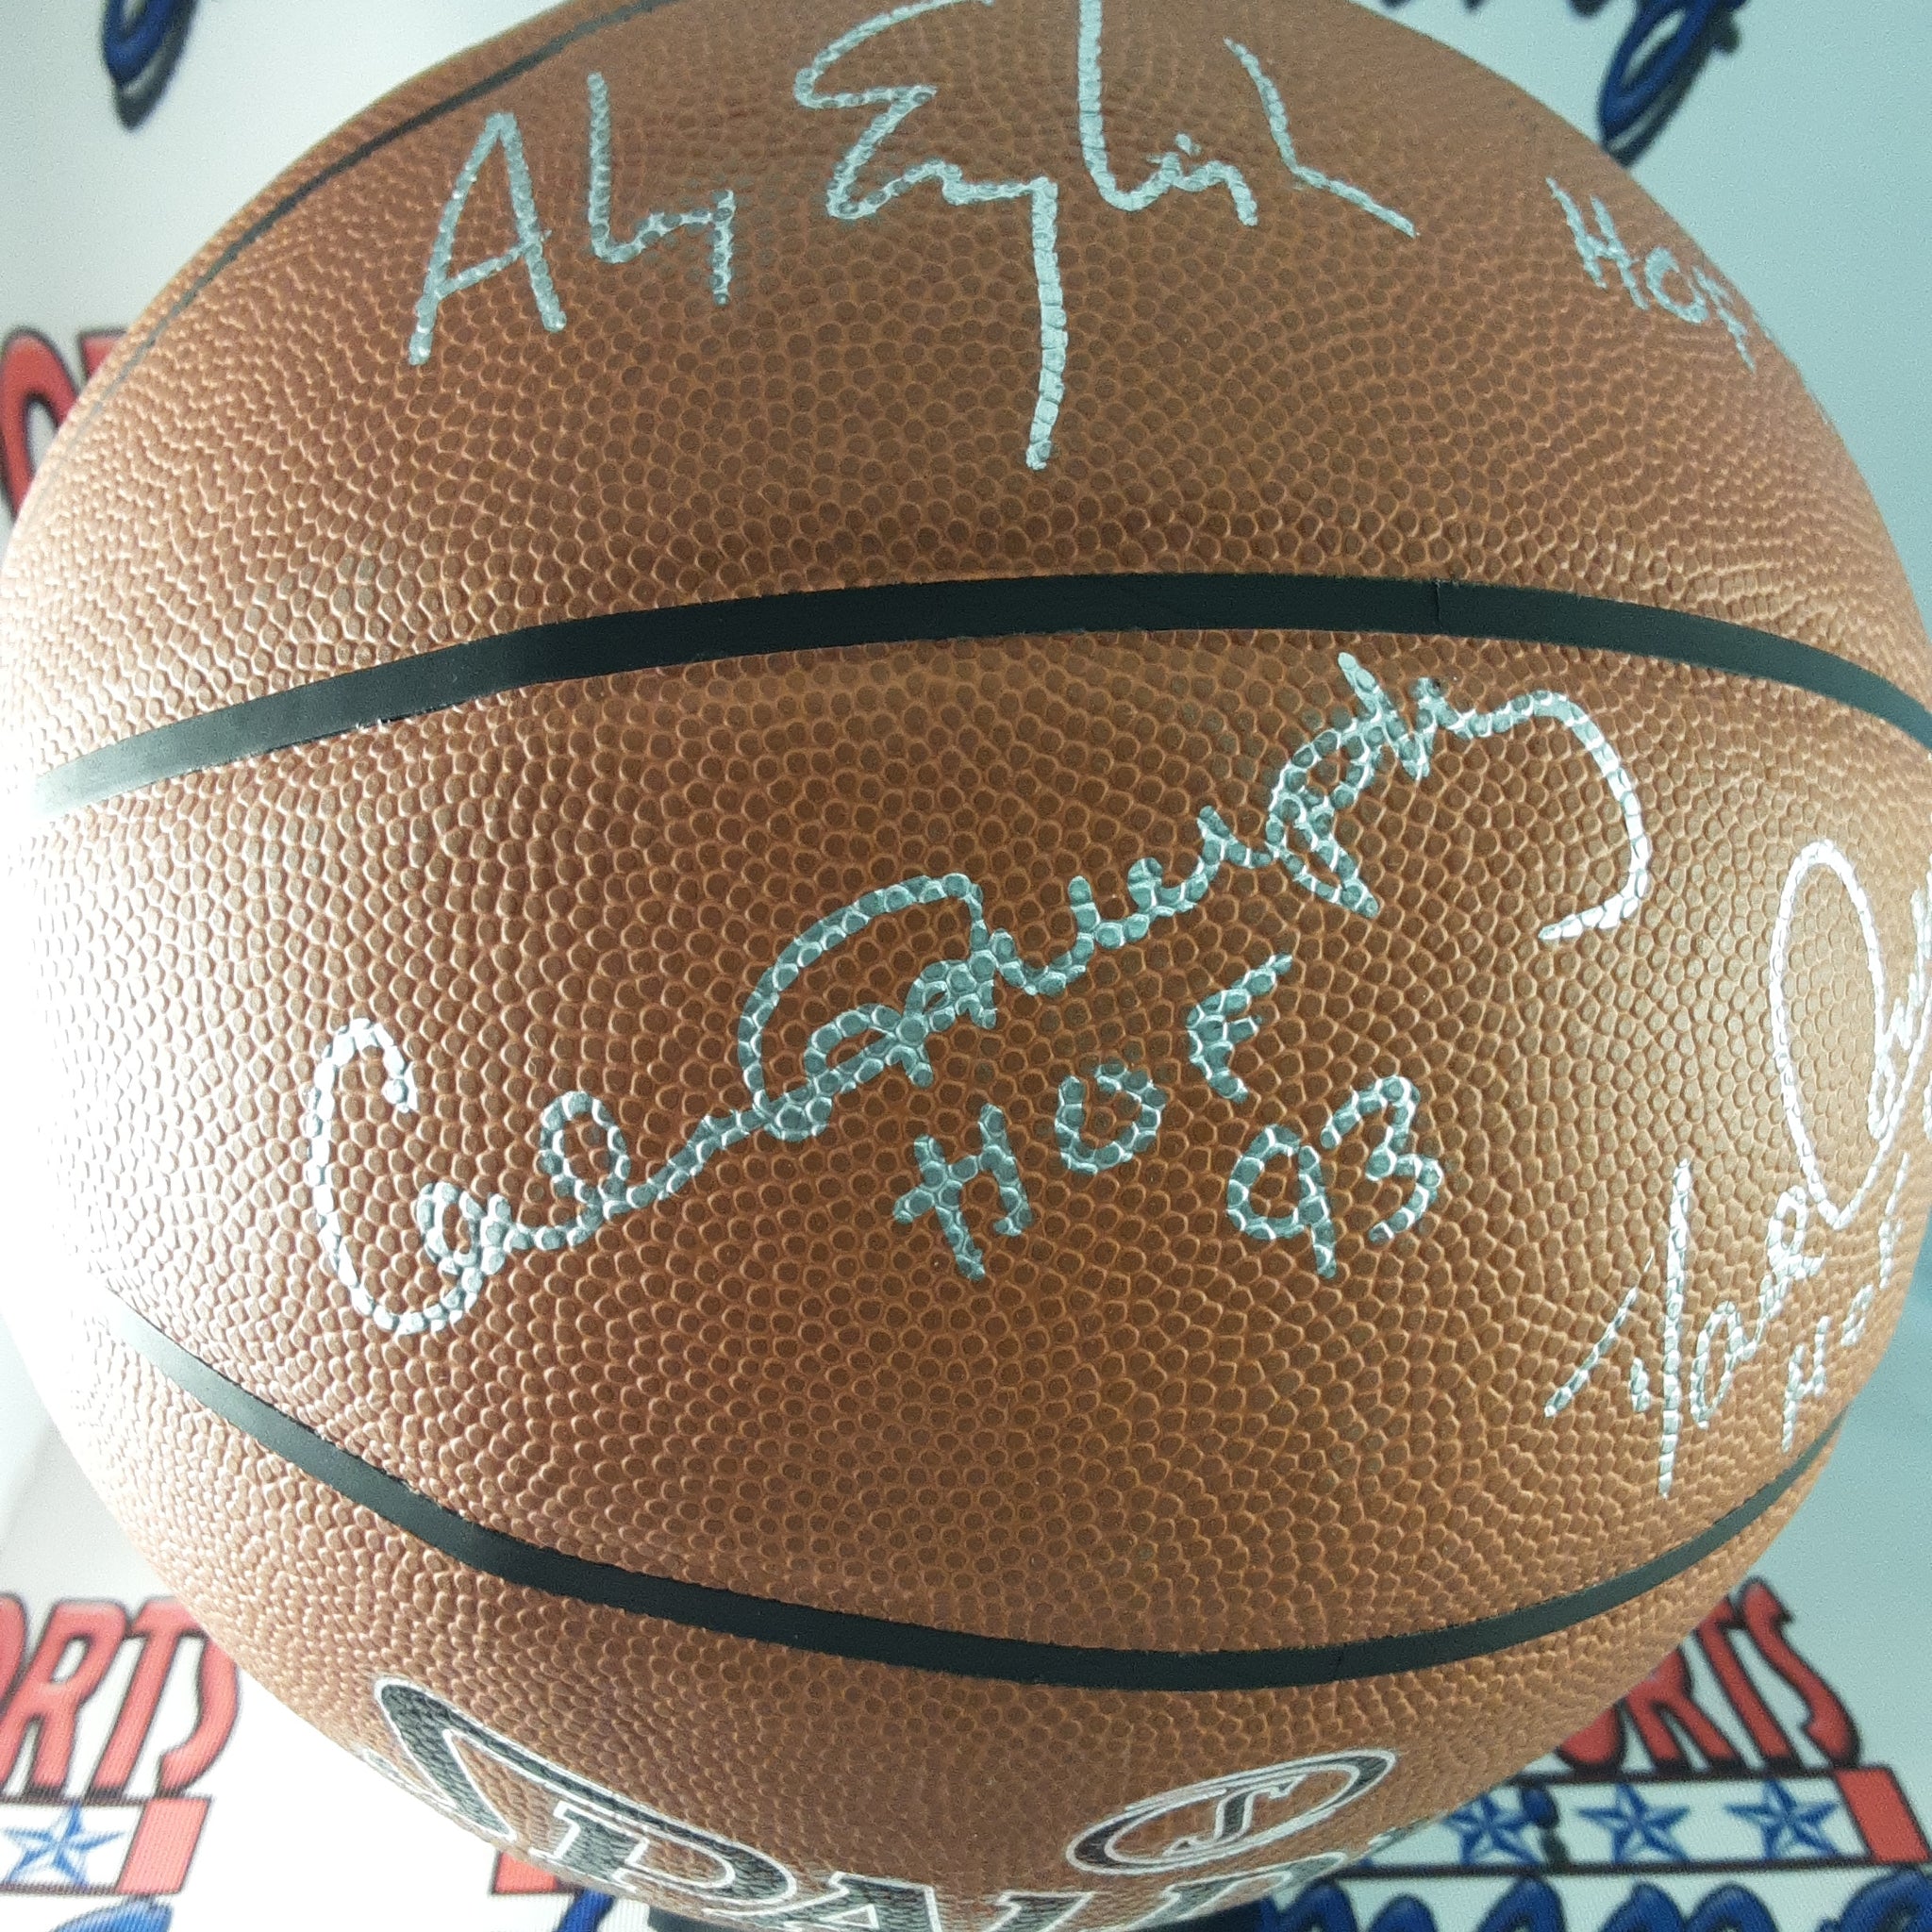 Cowens, English, & Murphy Hall of Fame Basketball Autographed JSA